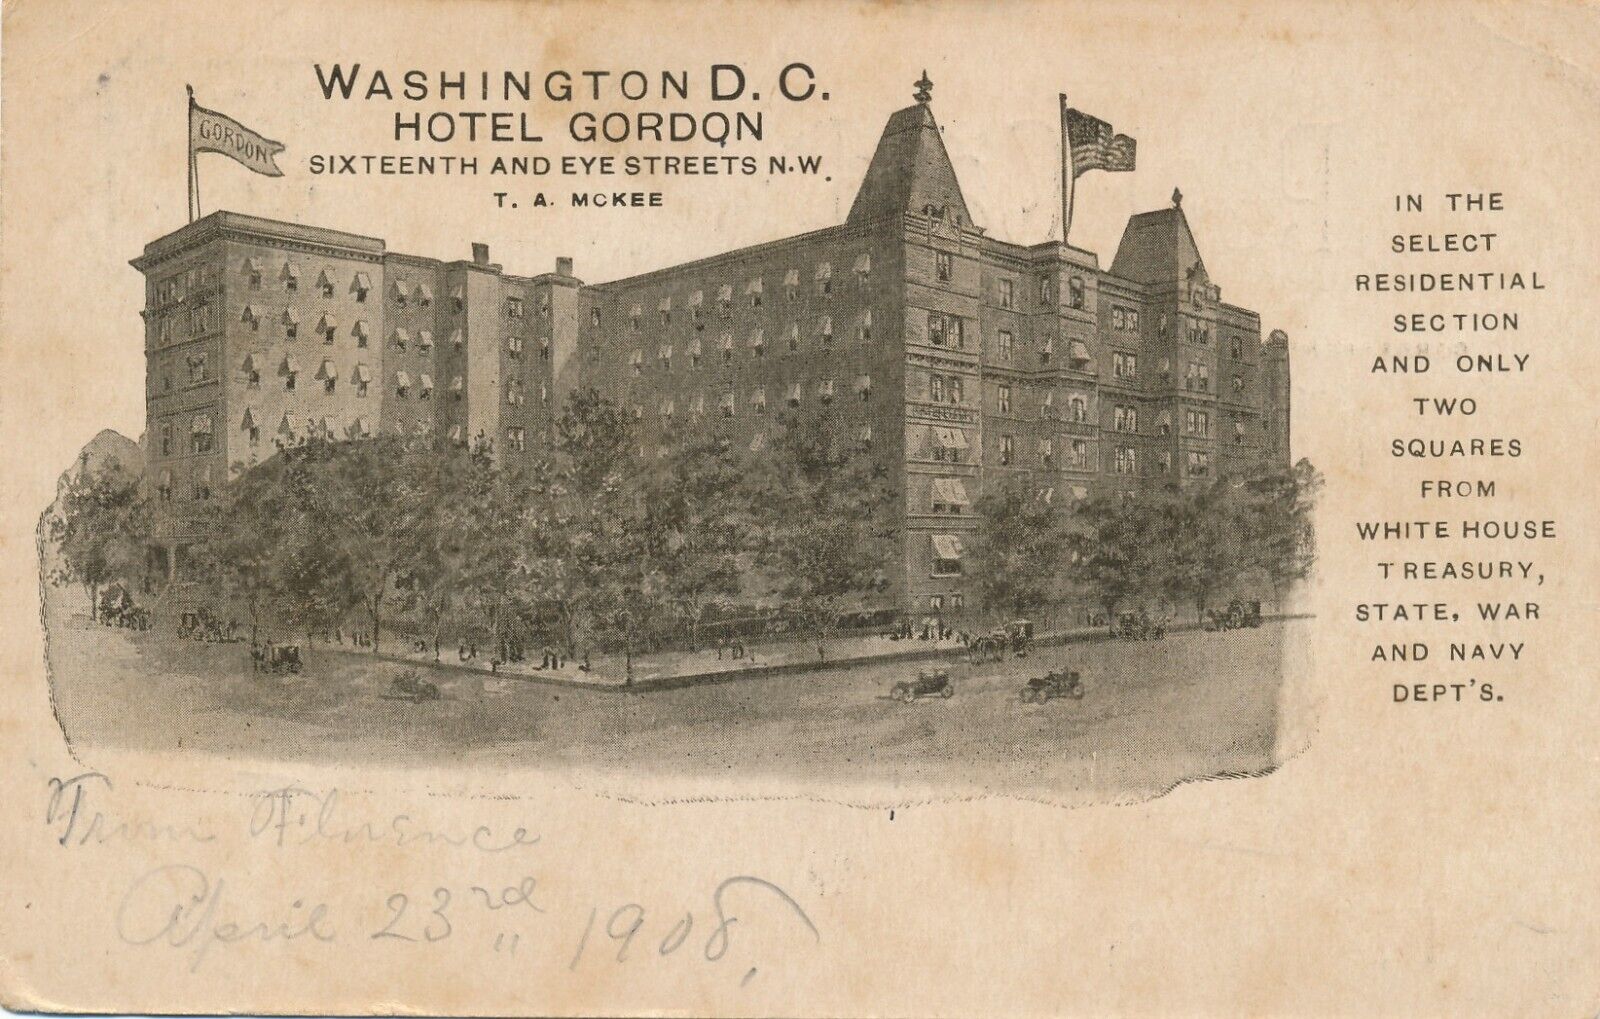 Hotel Gordon in Washington D.C. 16th and Eye Streets NW 1908 postcard